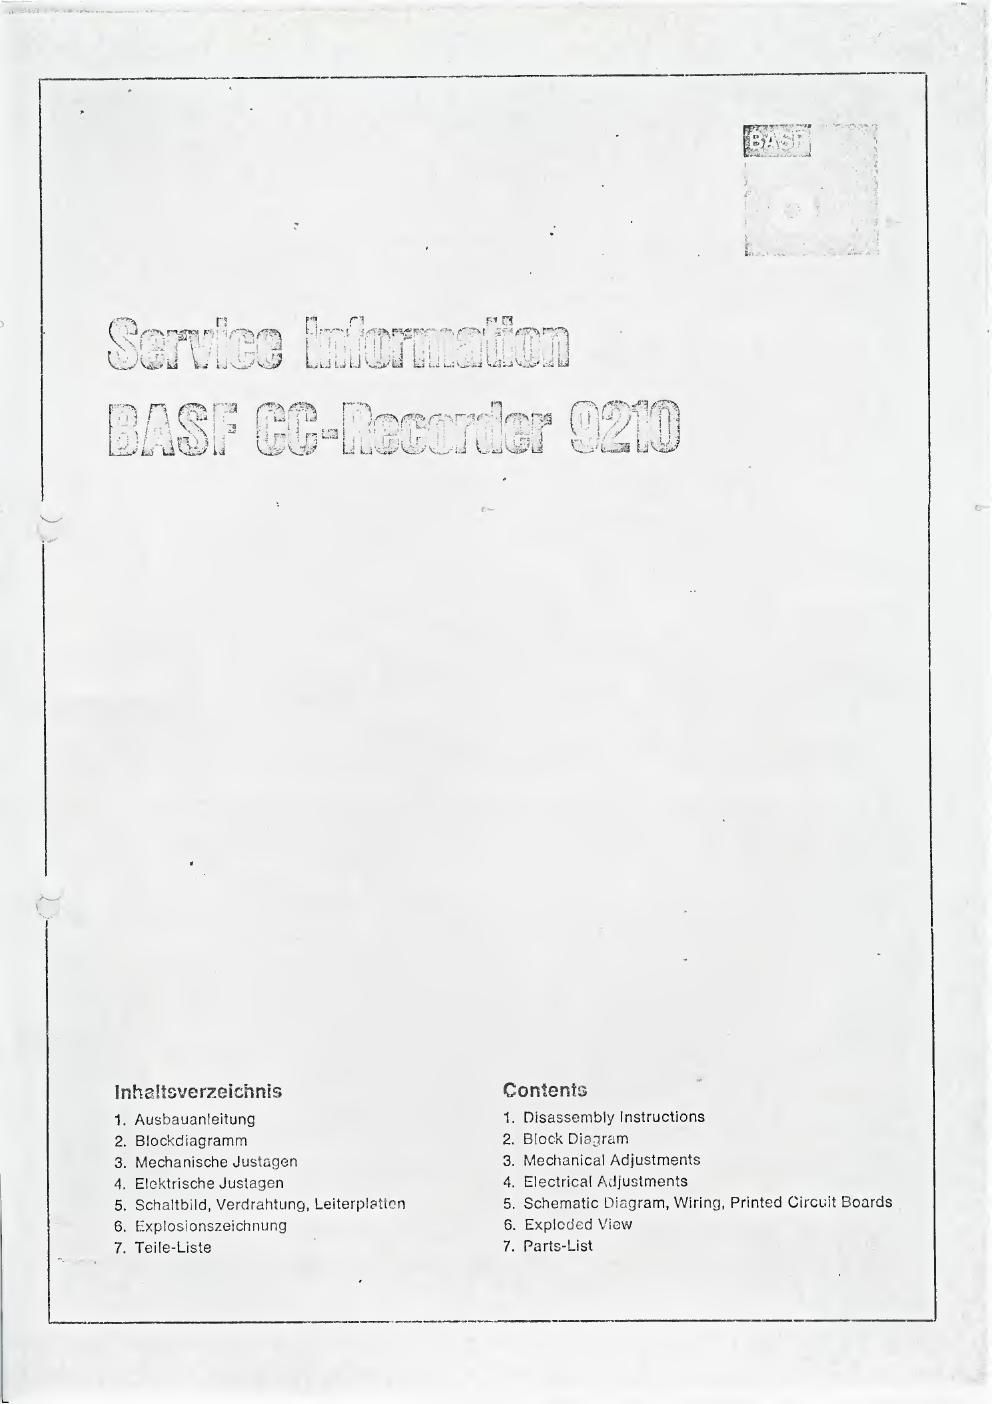 basf 9210 service manual